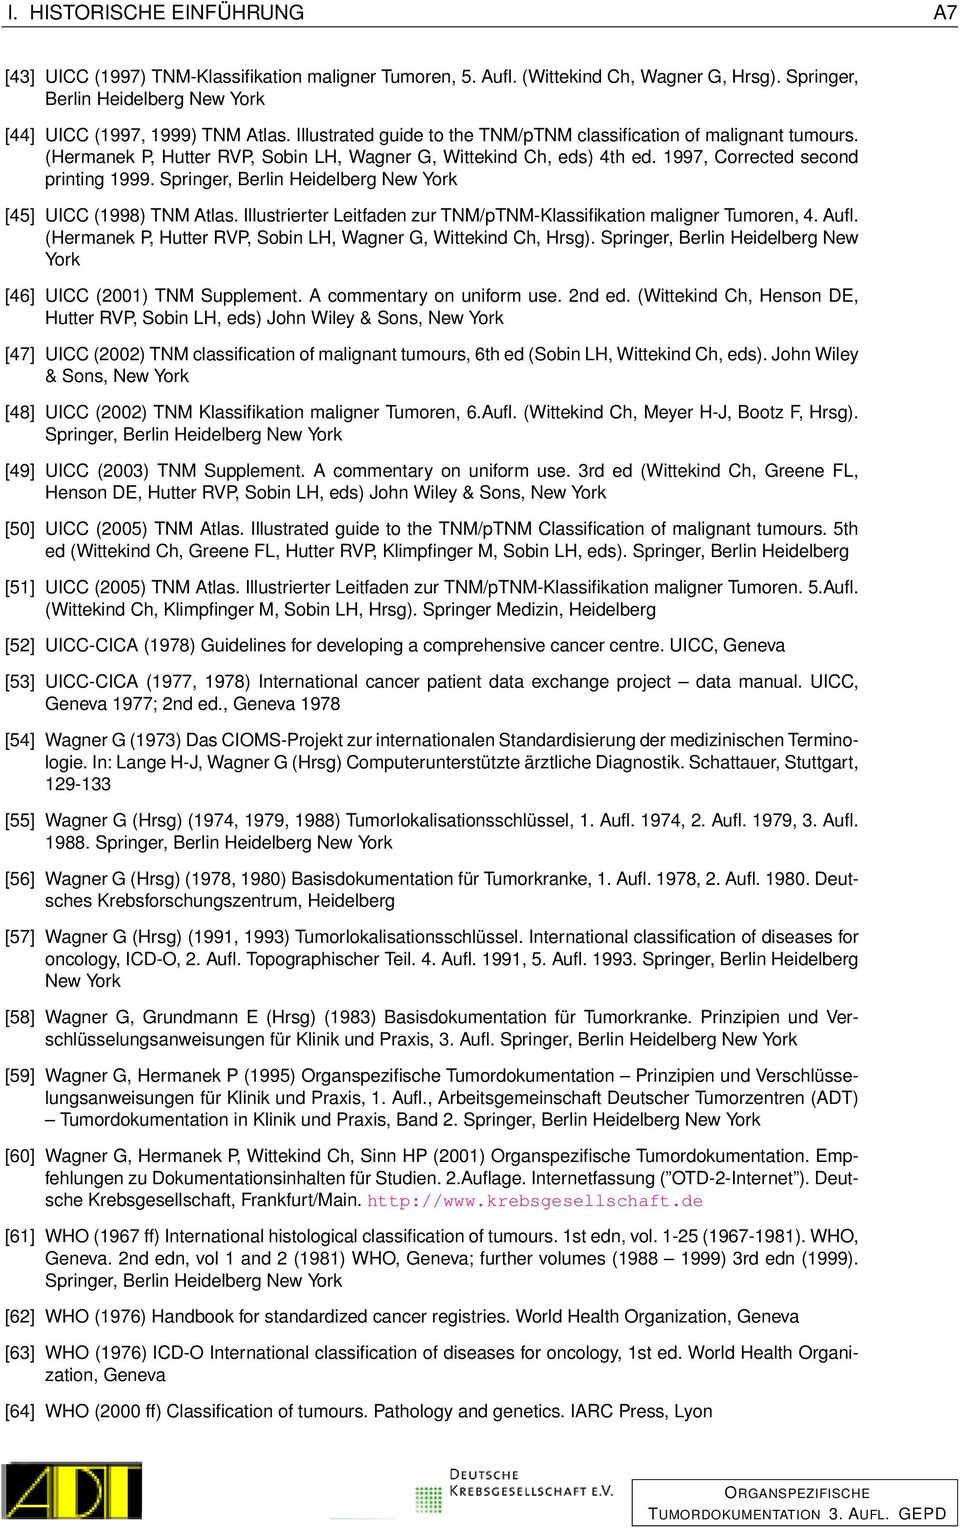 Springer, Berlin Heidelberg New York [45] UICC (1998) TNM Atlas. Illustrierter Leitfaden zur TNM/pTNM-Klassifikation maligner Tumoren, 4. Aufl.